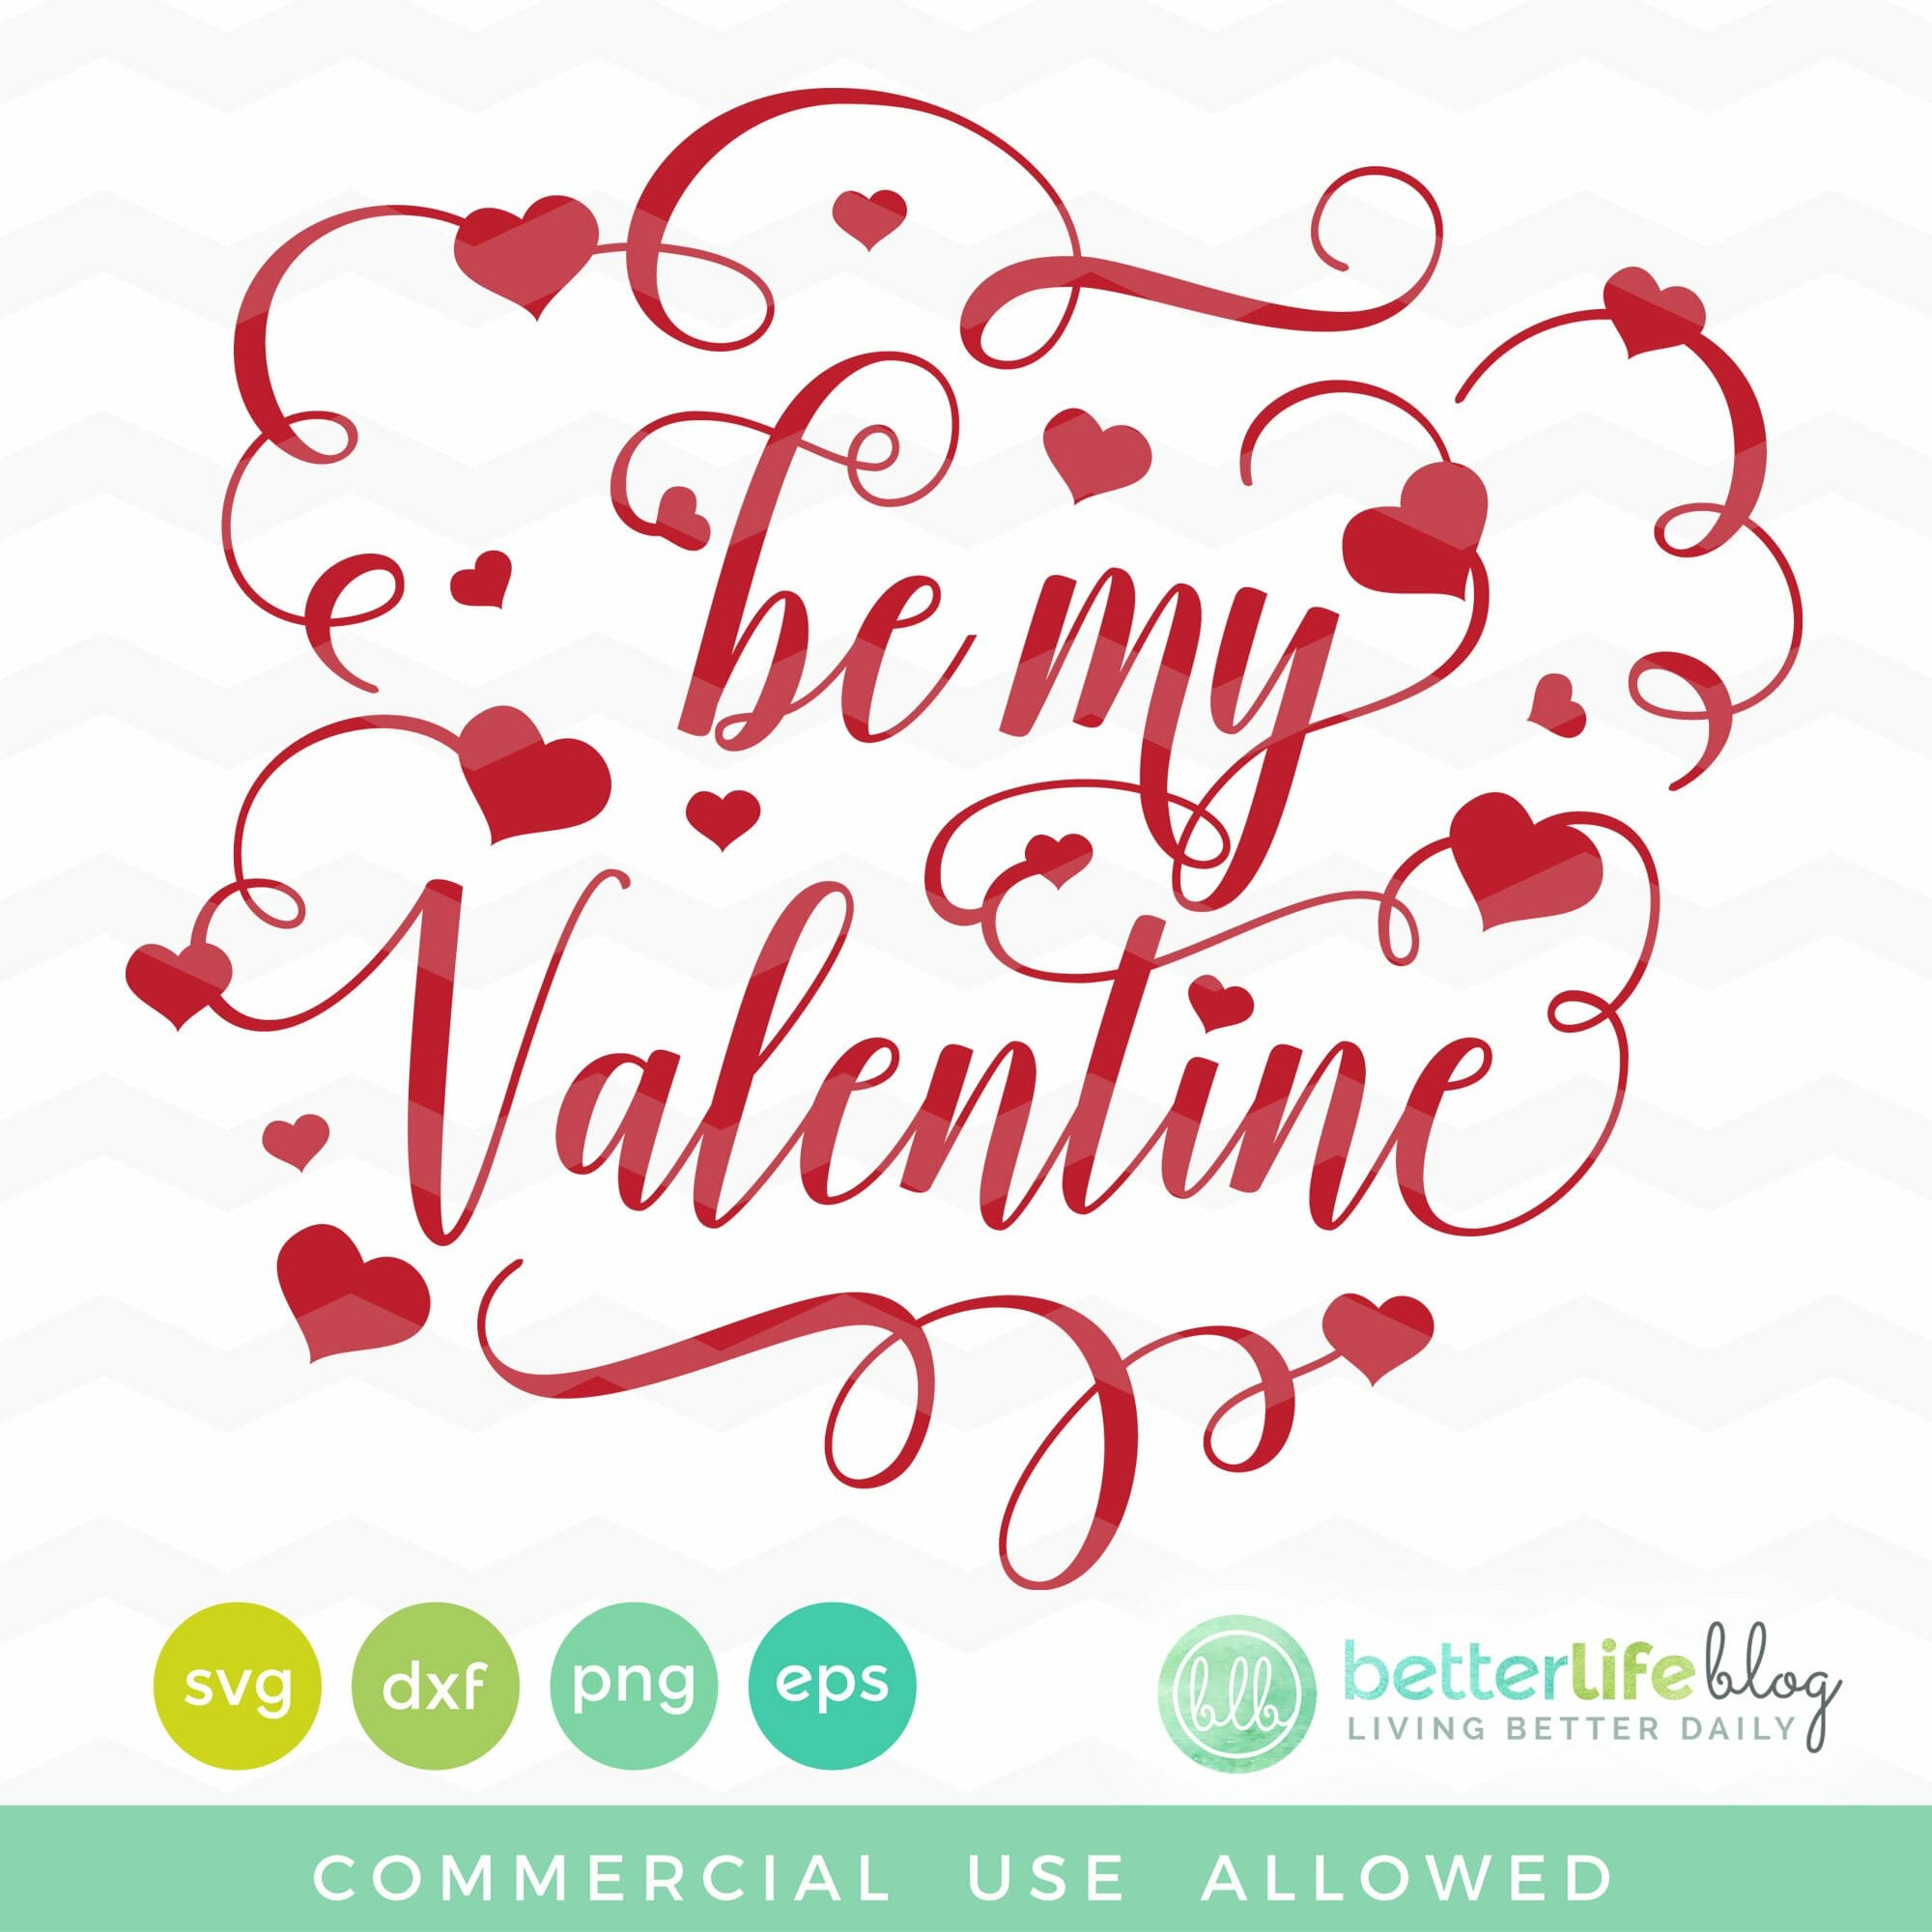 Be My Valentine 2 SVG File - Better Life Blog